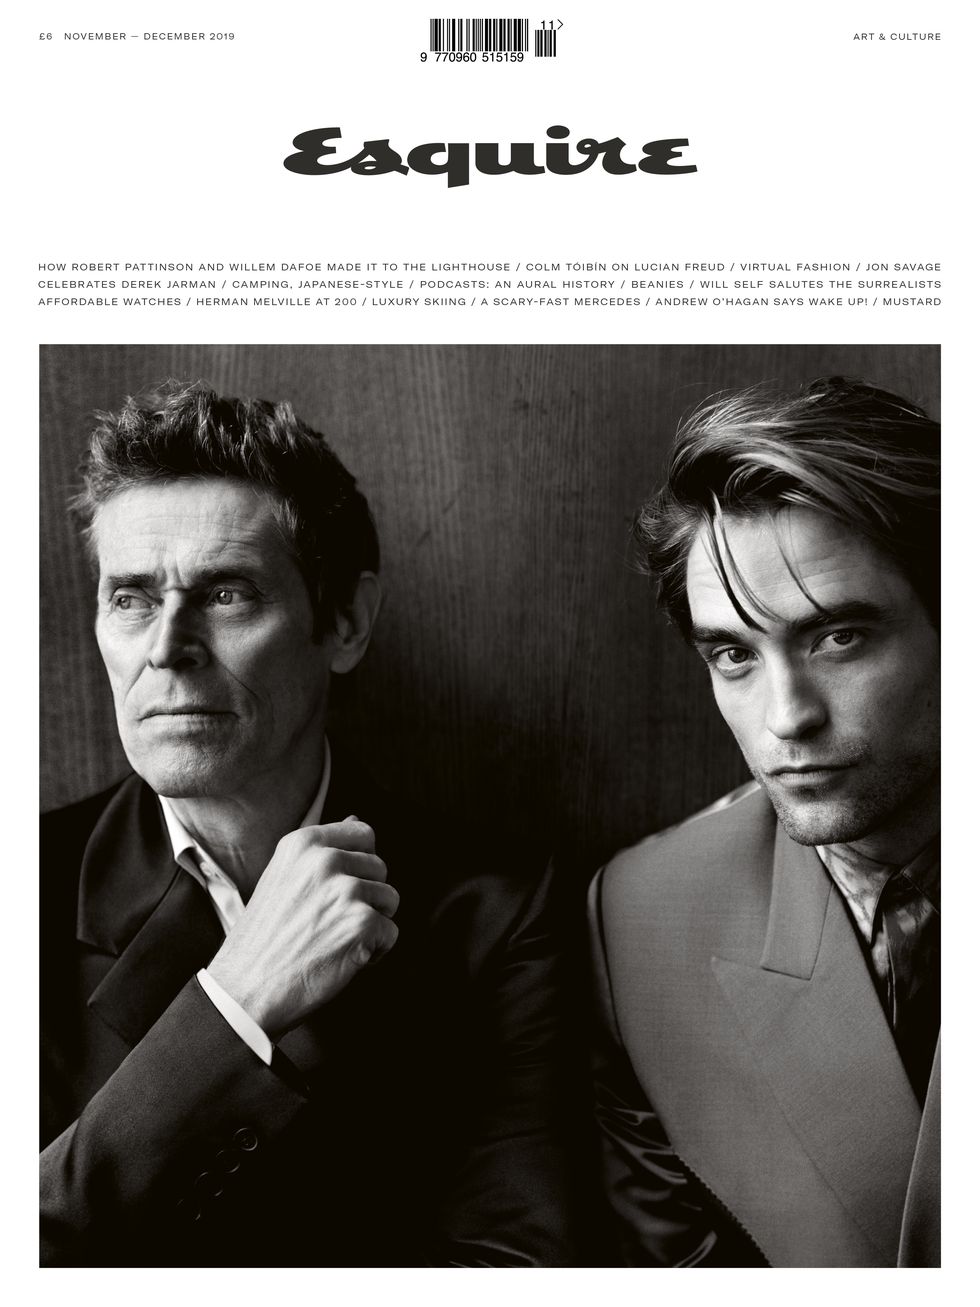 Robert Pattinson for Esquire